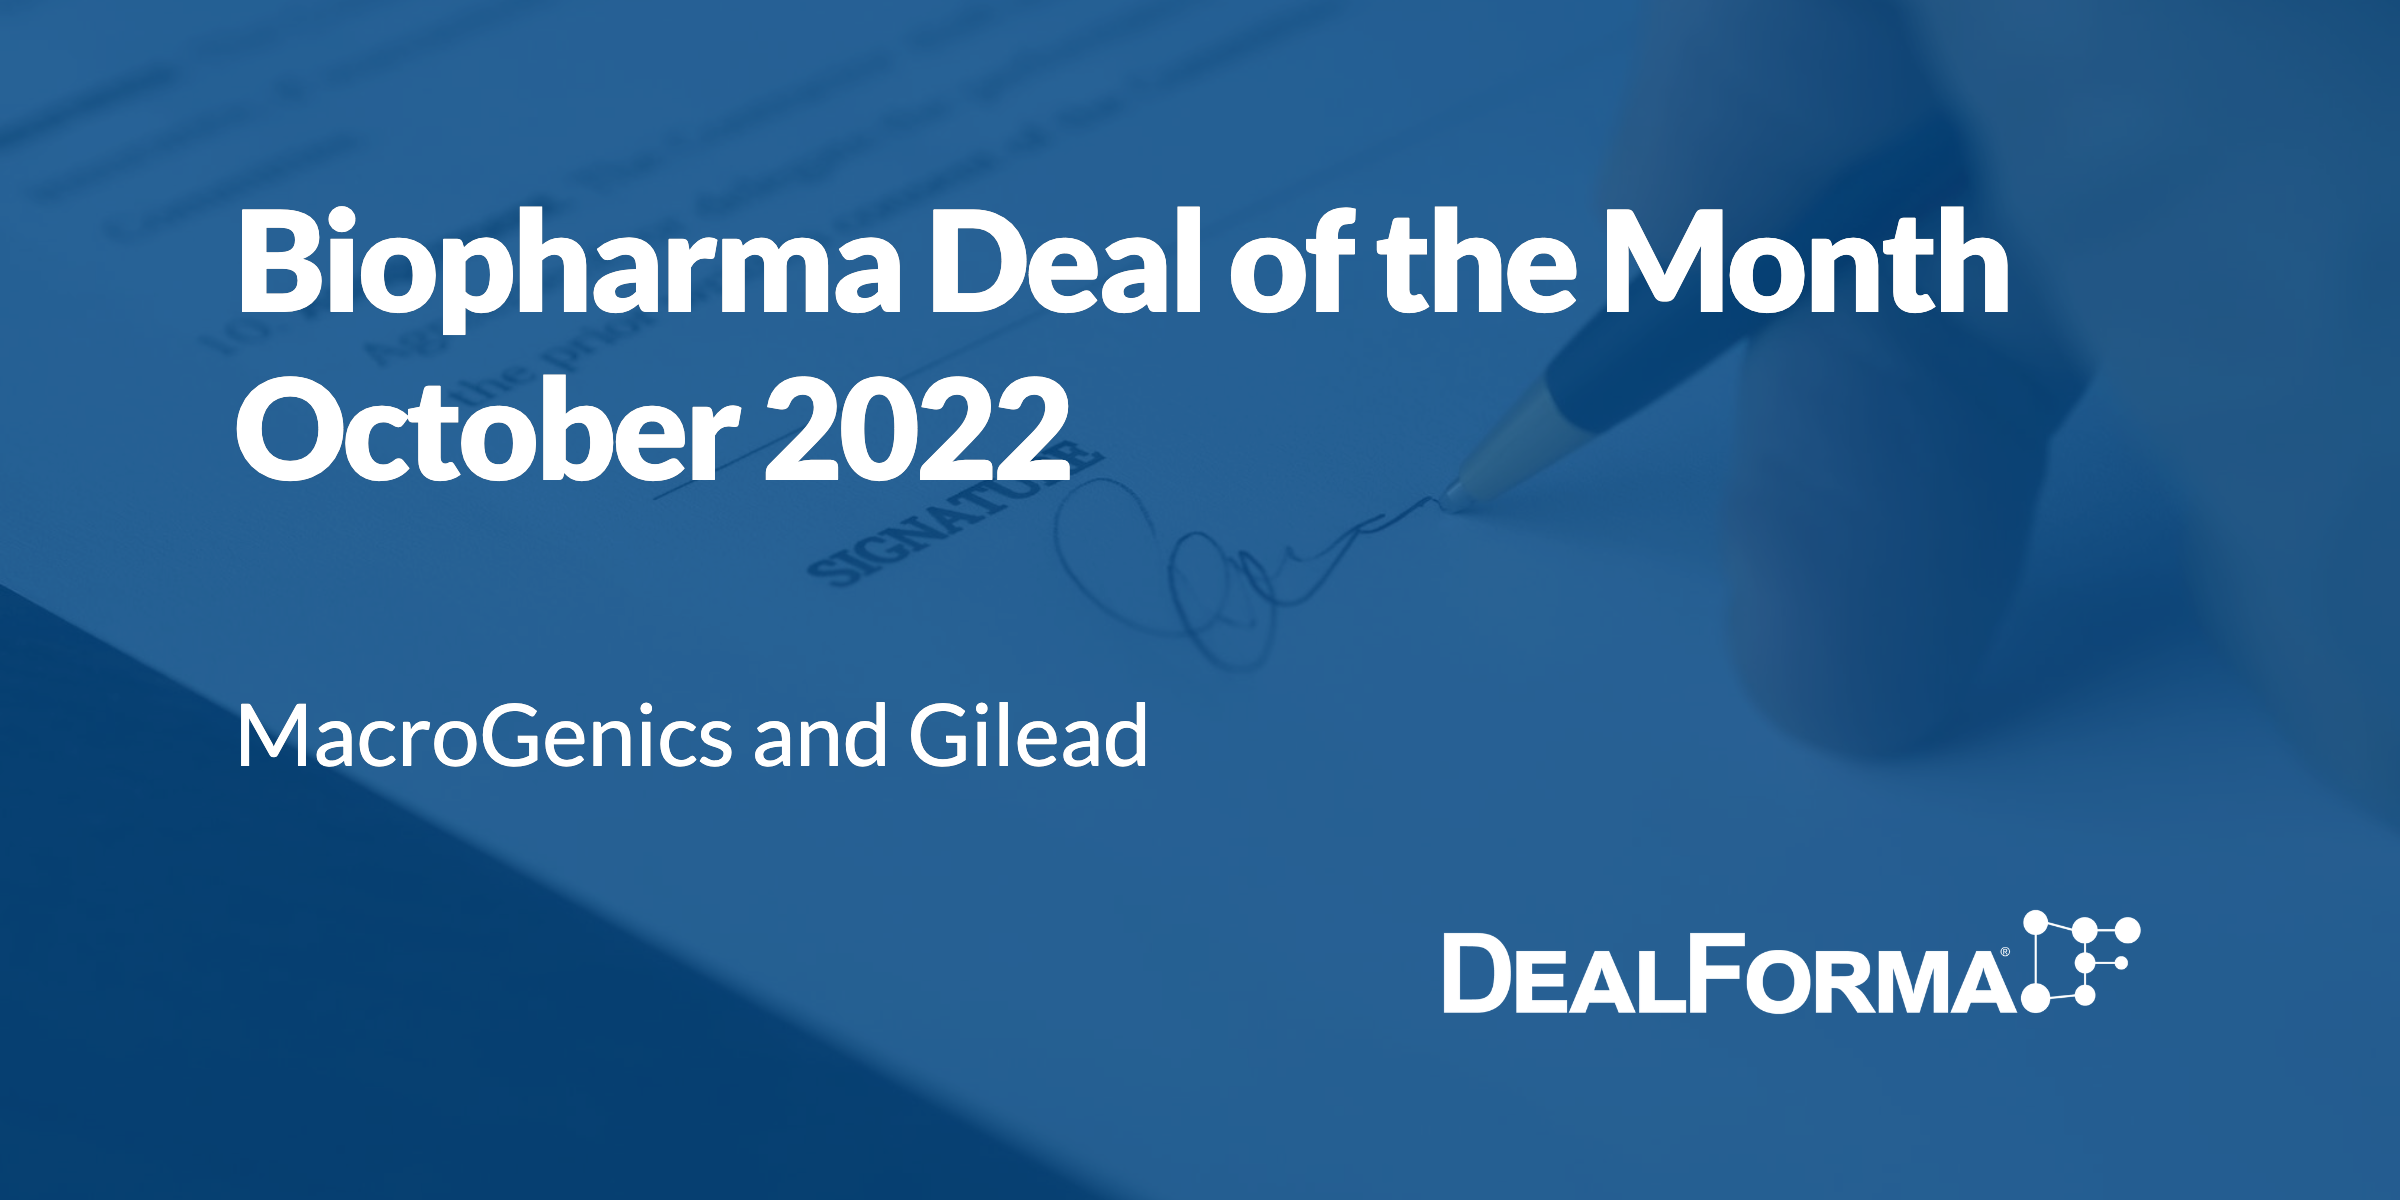 Top biopharma deal upfront Oct 2022